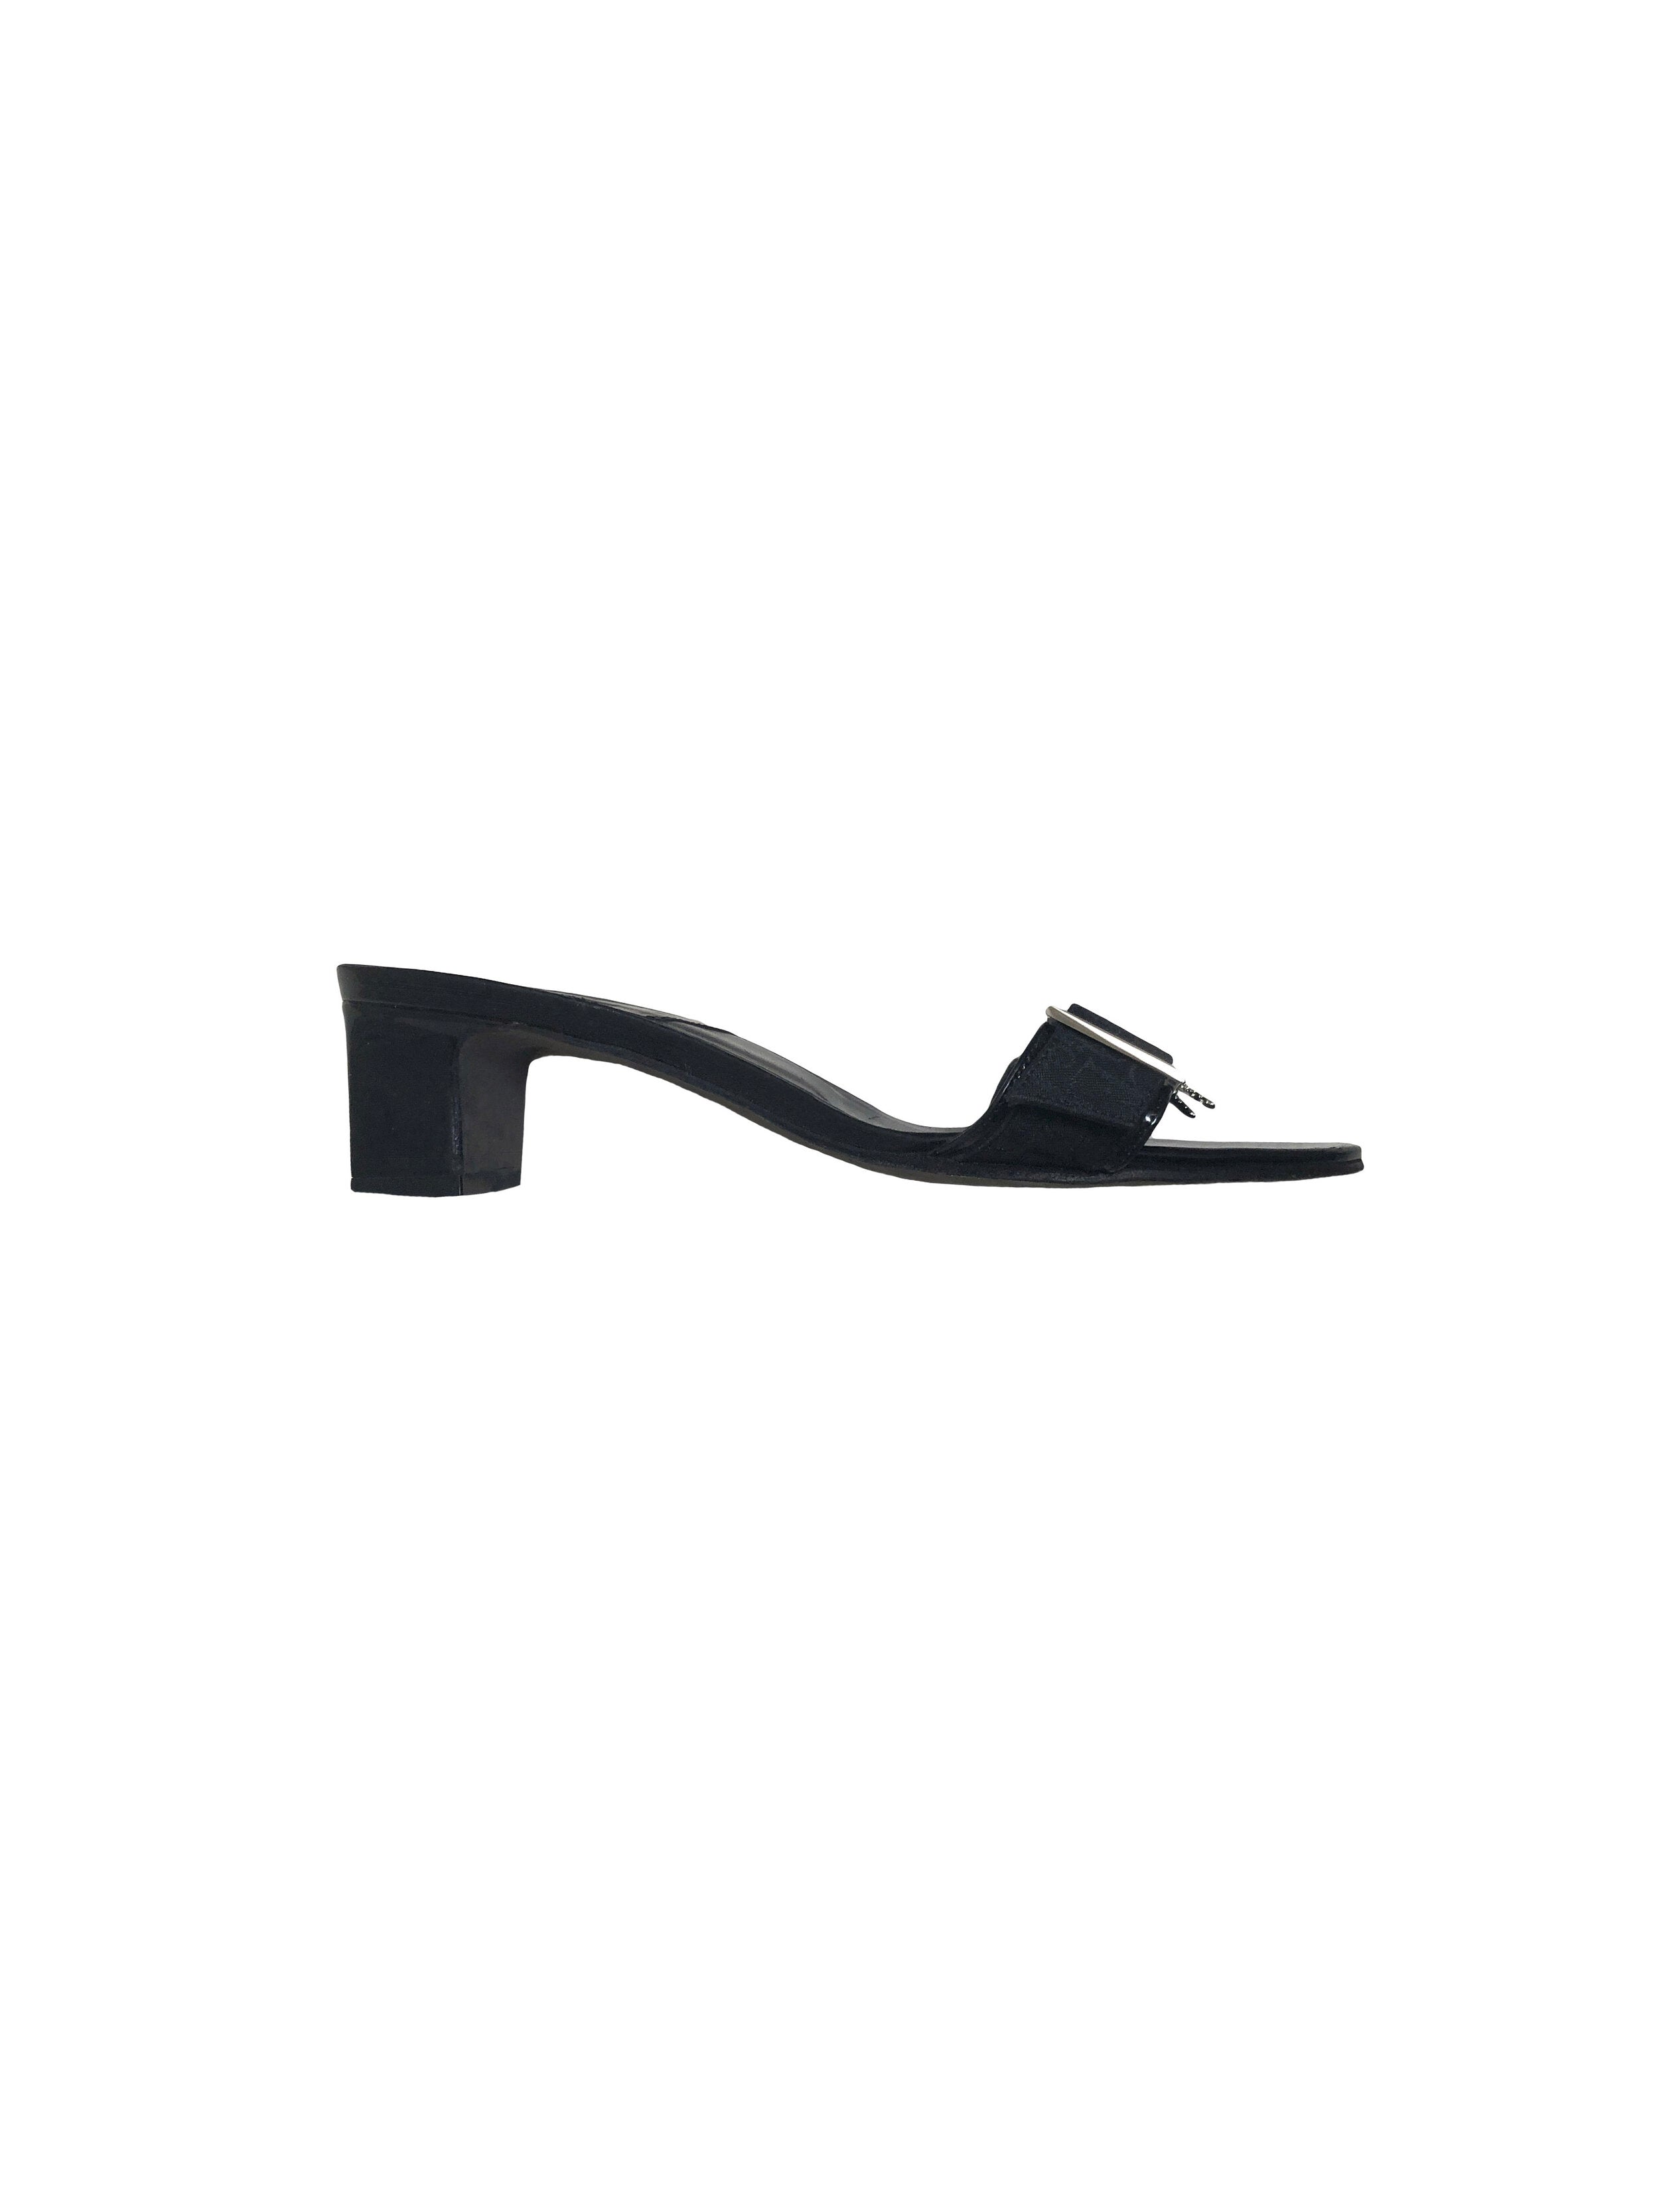 Christian Dior 2000s Black Key Sandals